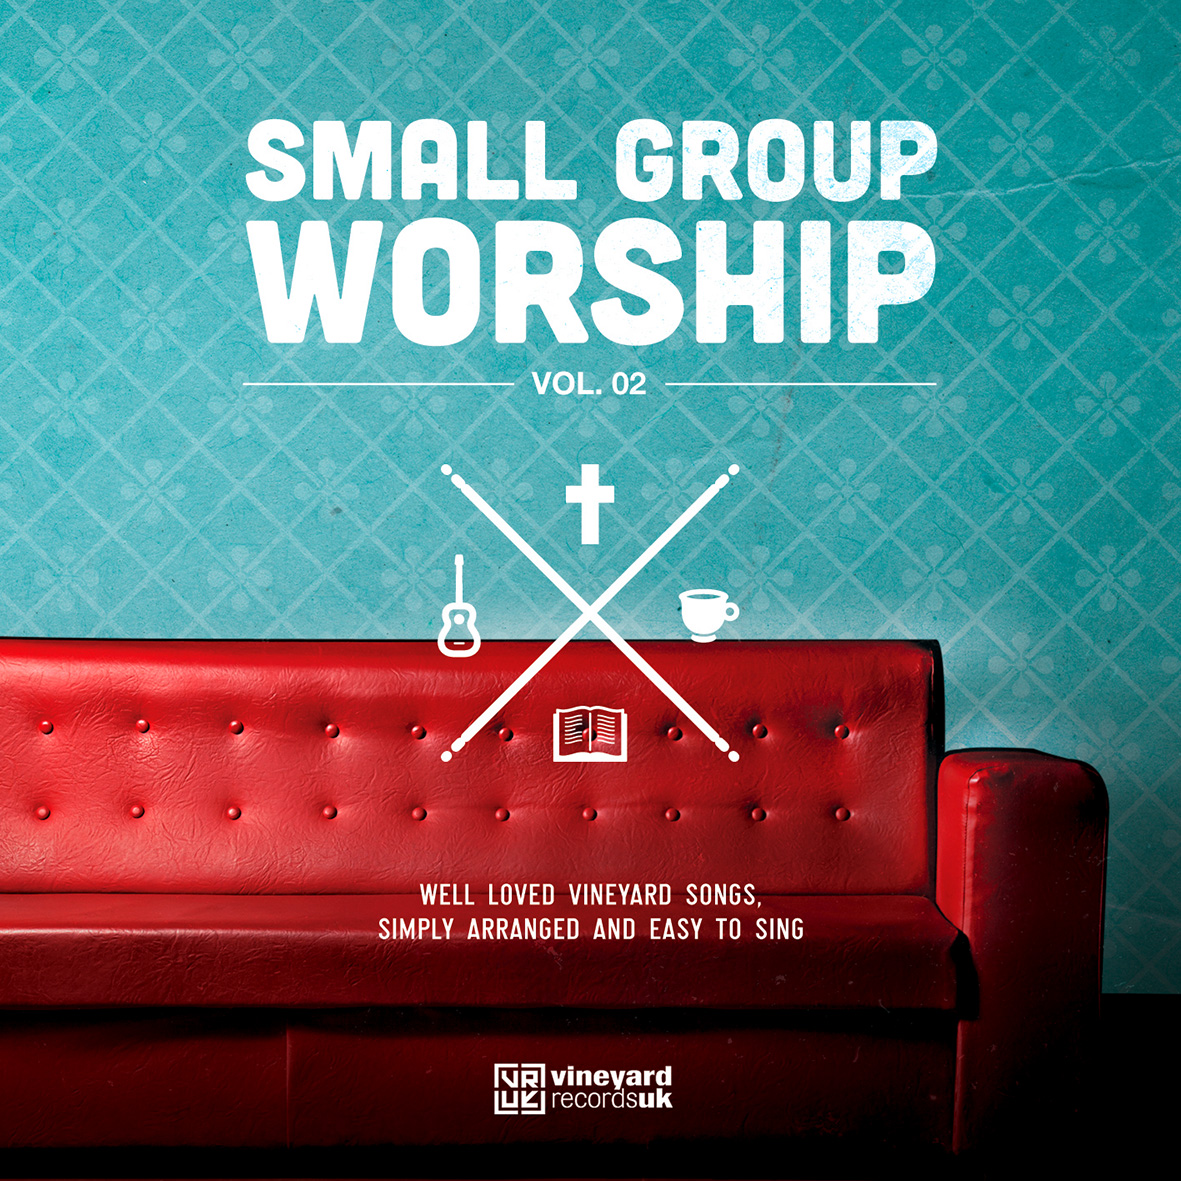 Small Group Worship Vol.2